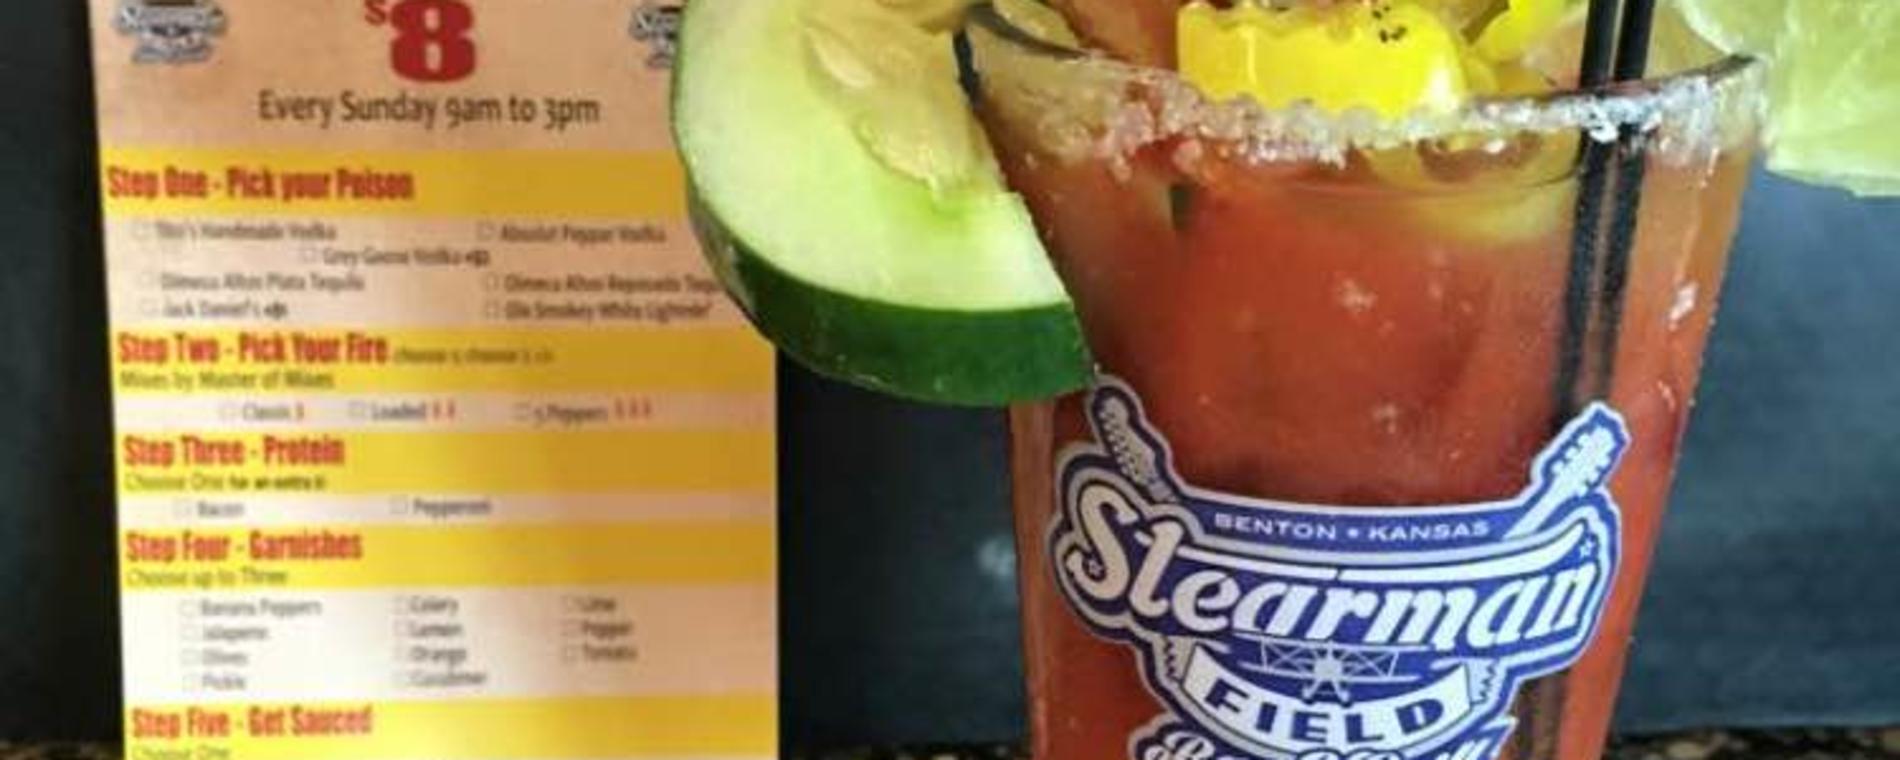 Stearmen Bar/Grill Bloody Mary Visit Wichita